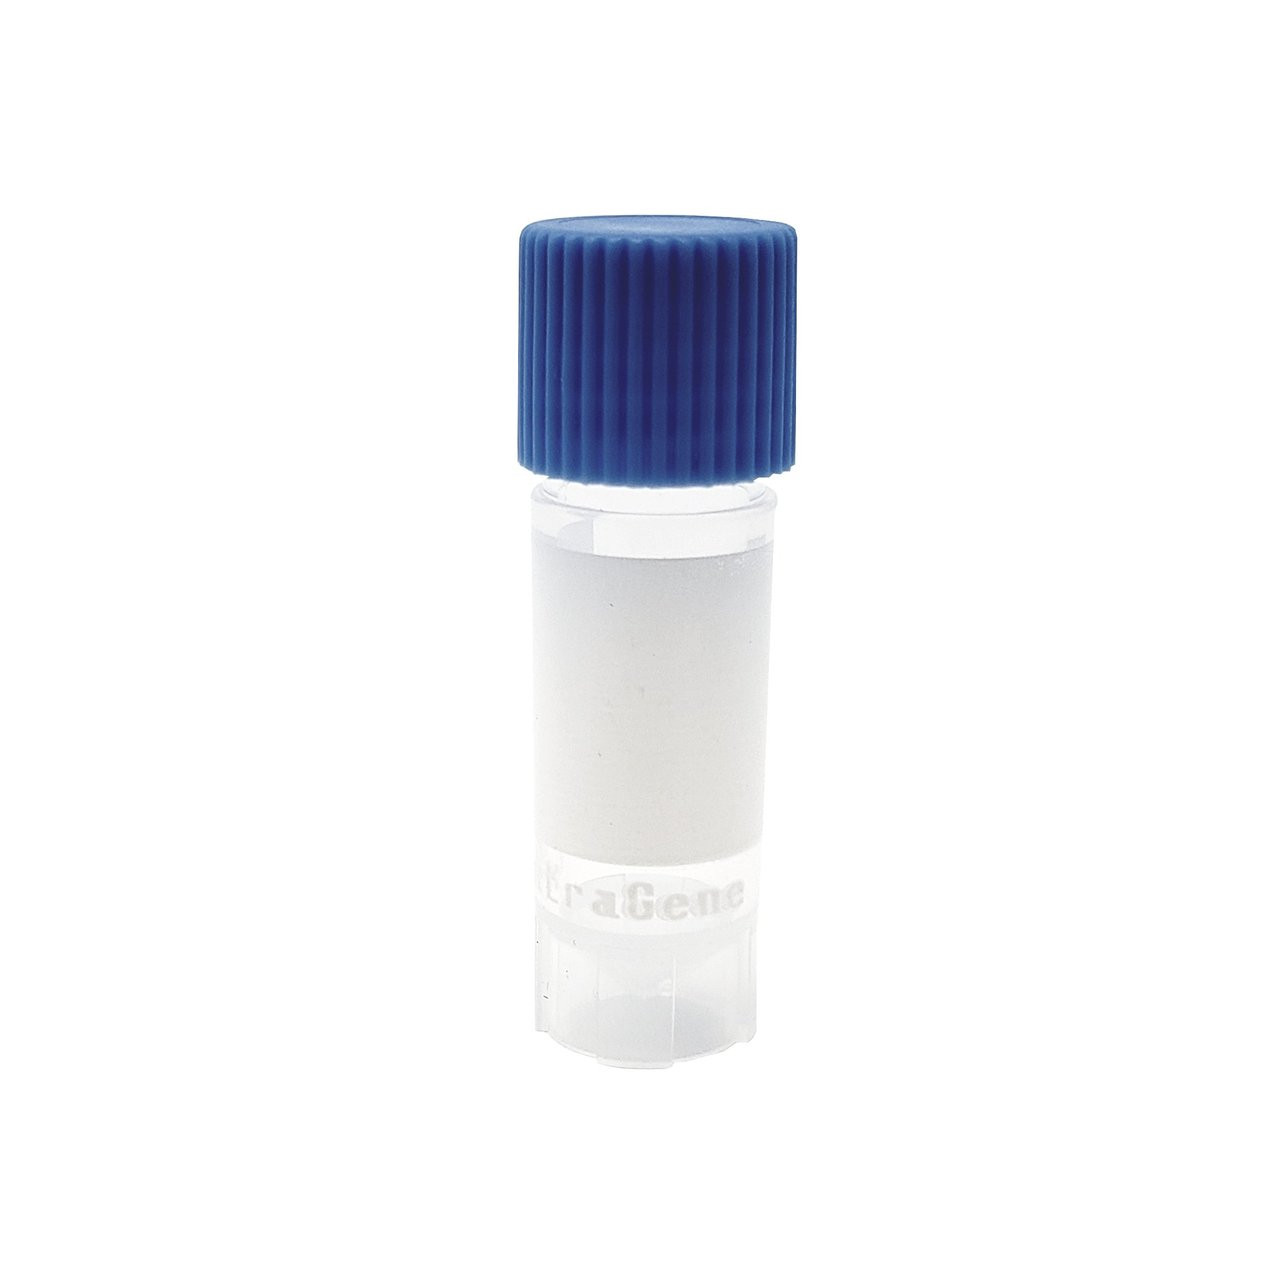 Extragene 1.2 ml Cryo Vial, Leakproof seal External cap, Self-Standing Polypropilene Sterilized Bag x 50 Color Blue